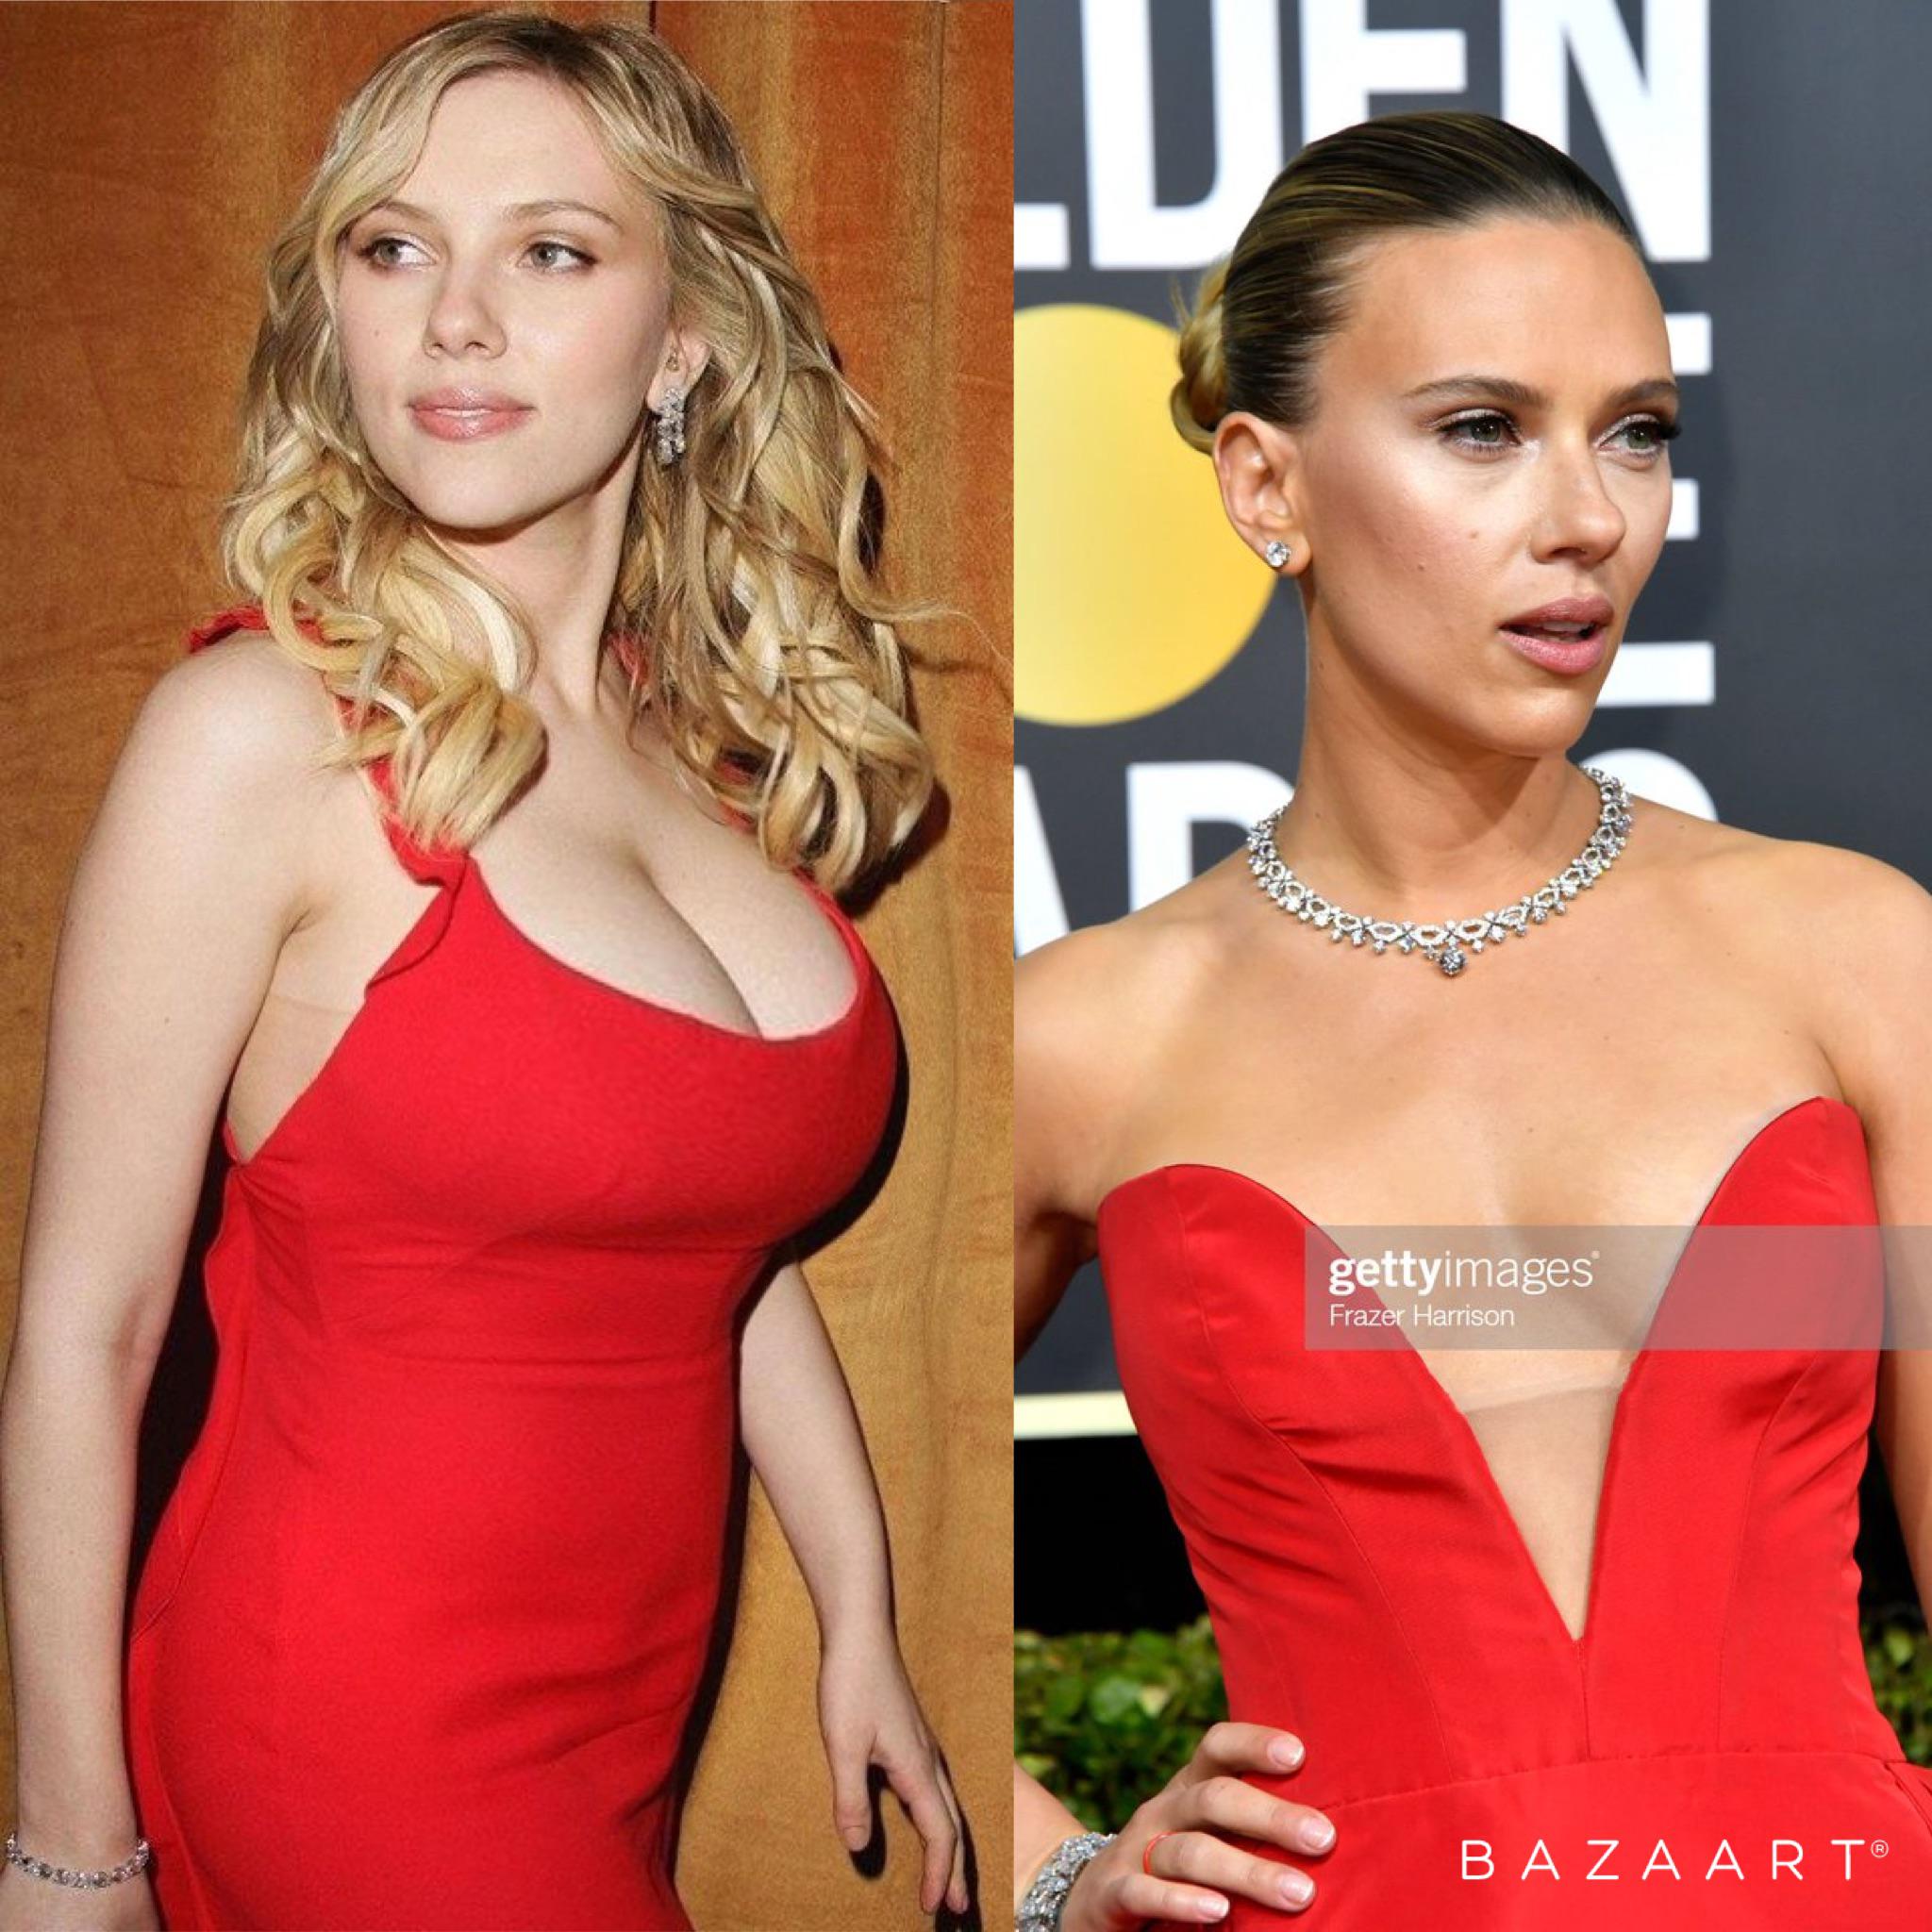 Scarlett Johansson - Do you guys prefer bigger or skinny? 6